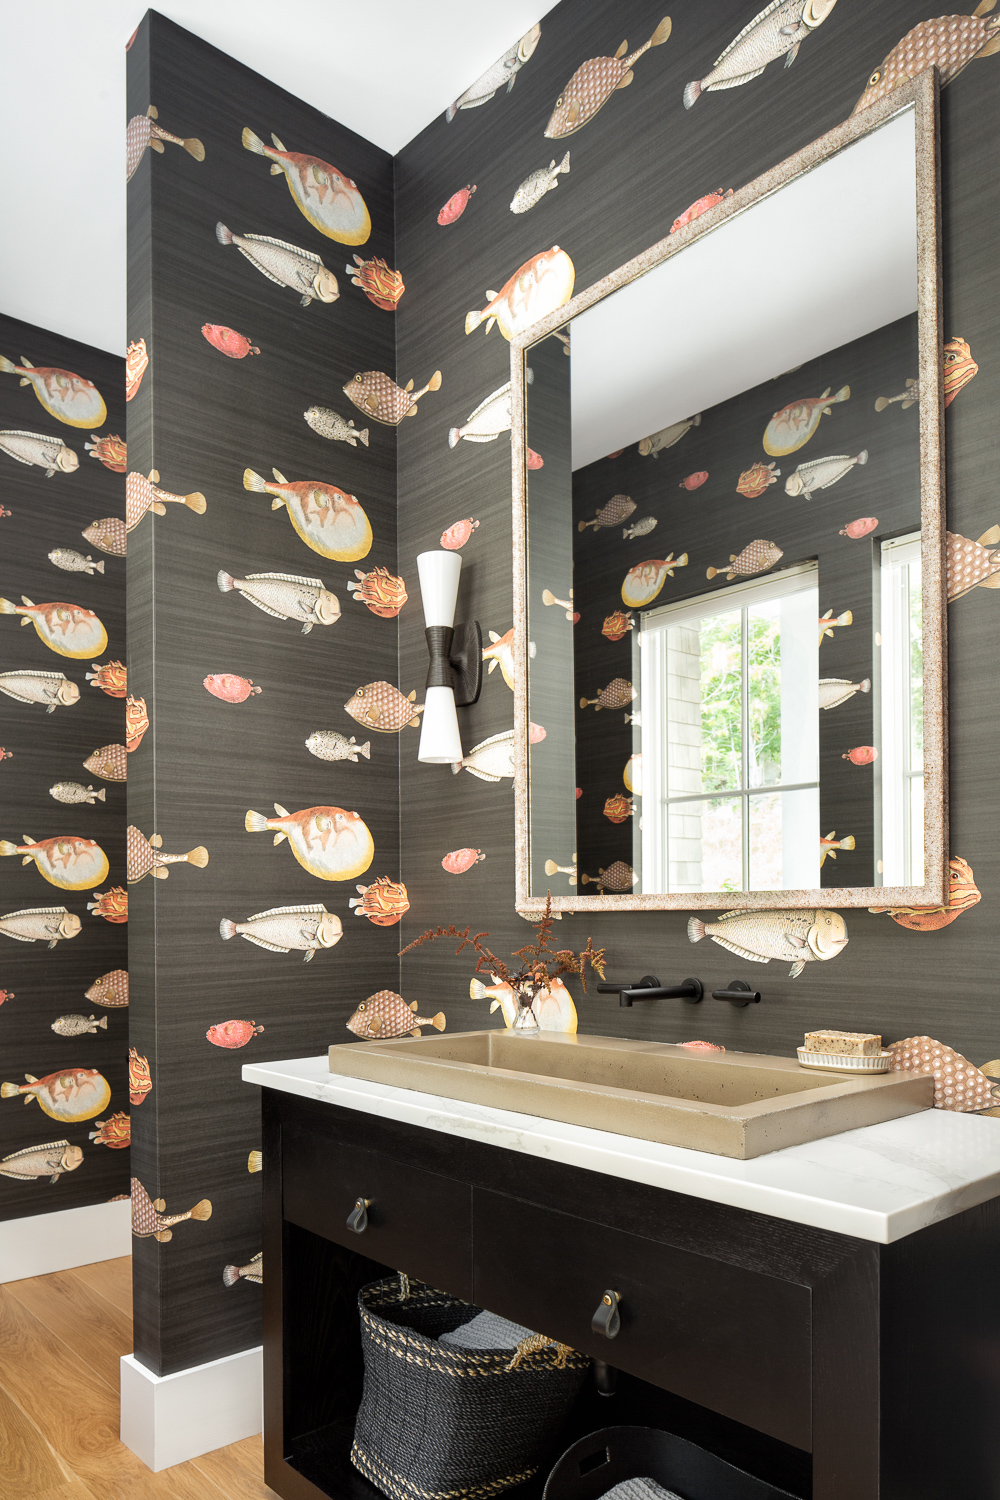 Powder room featuring fish motif wallpaper